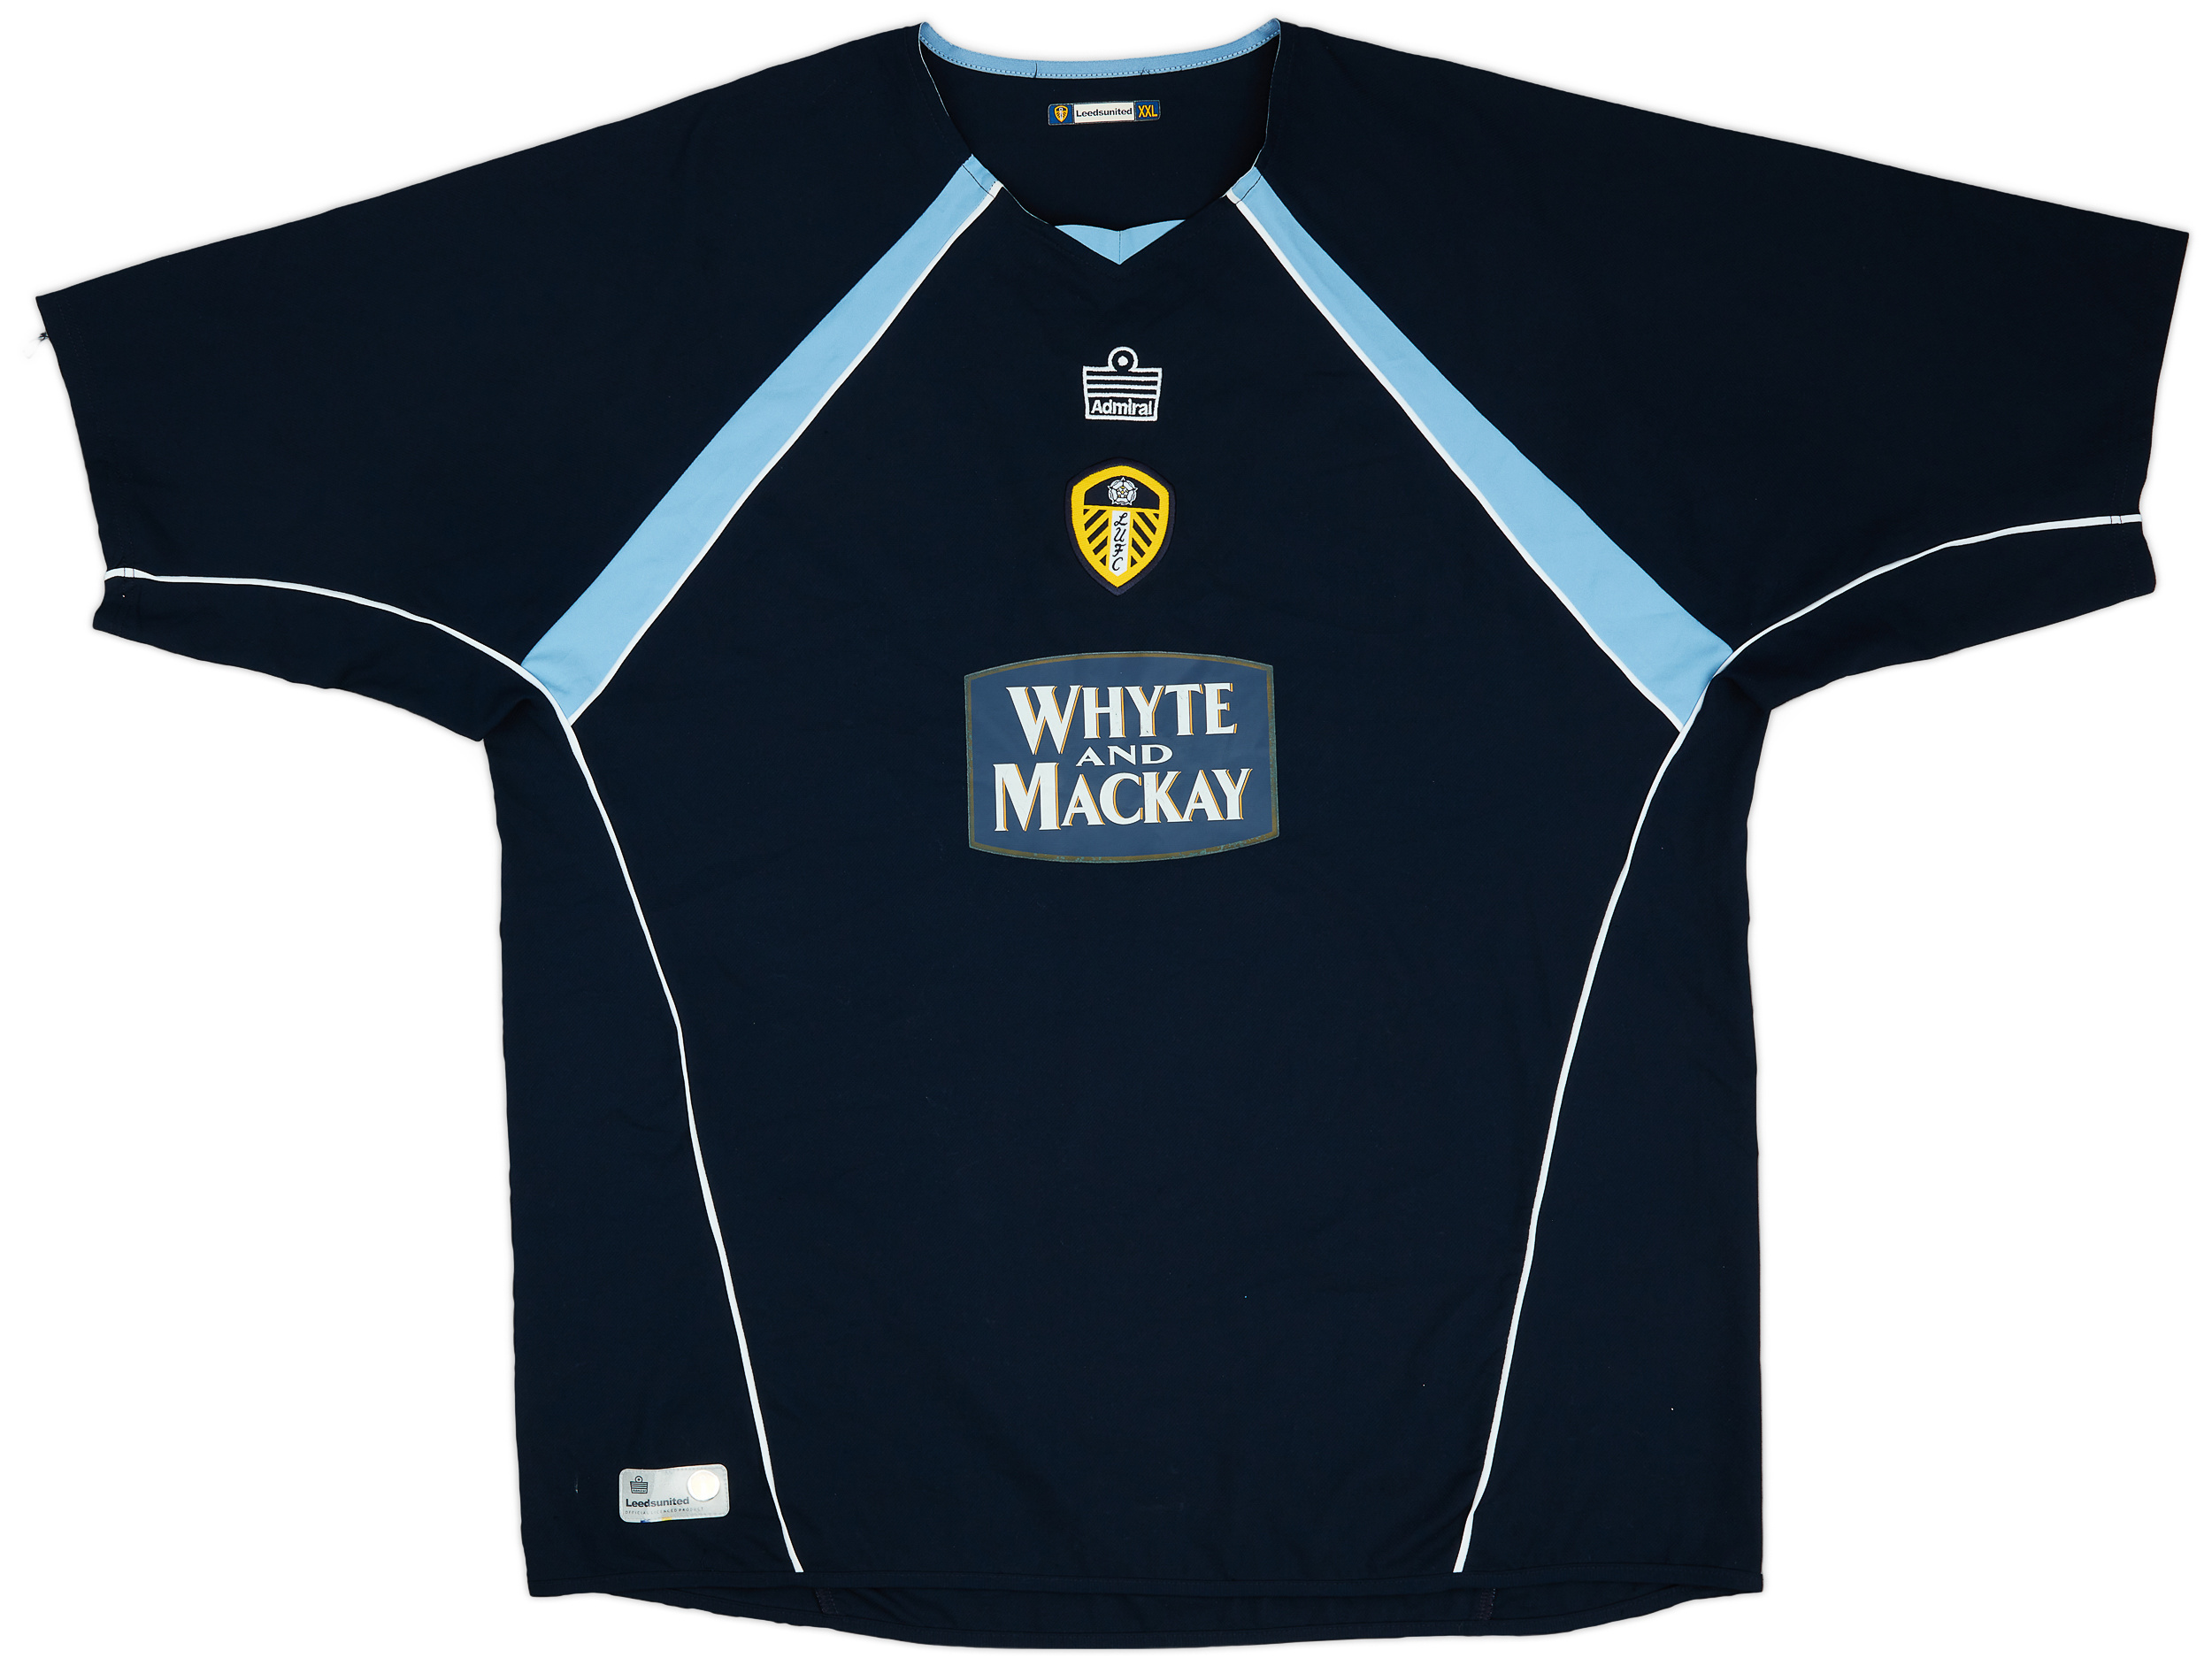 2005-06 Leeds United Away Shirt - 9/10 - ()